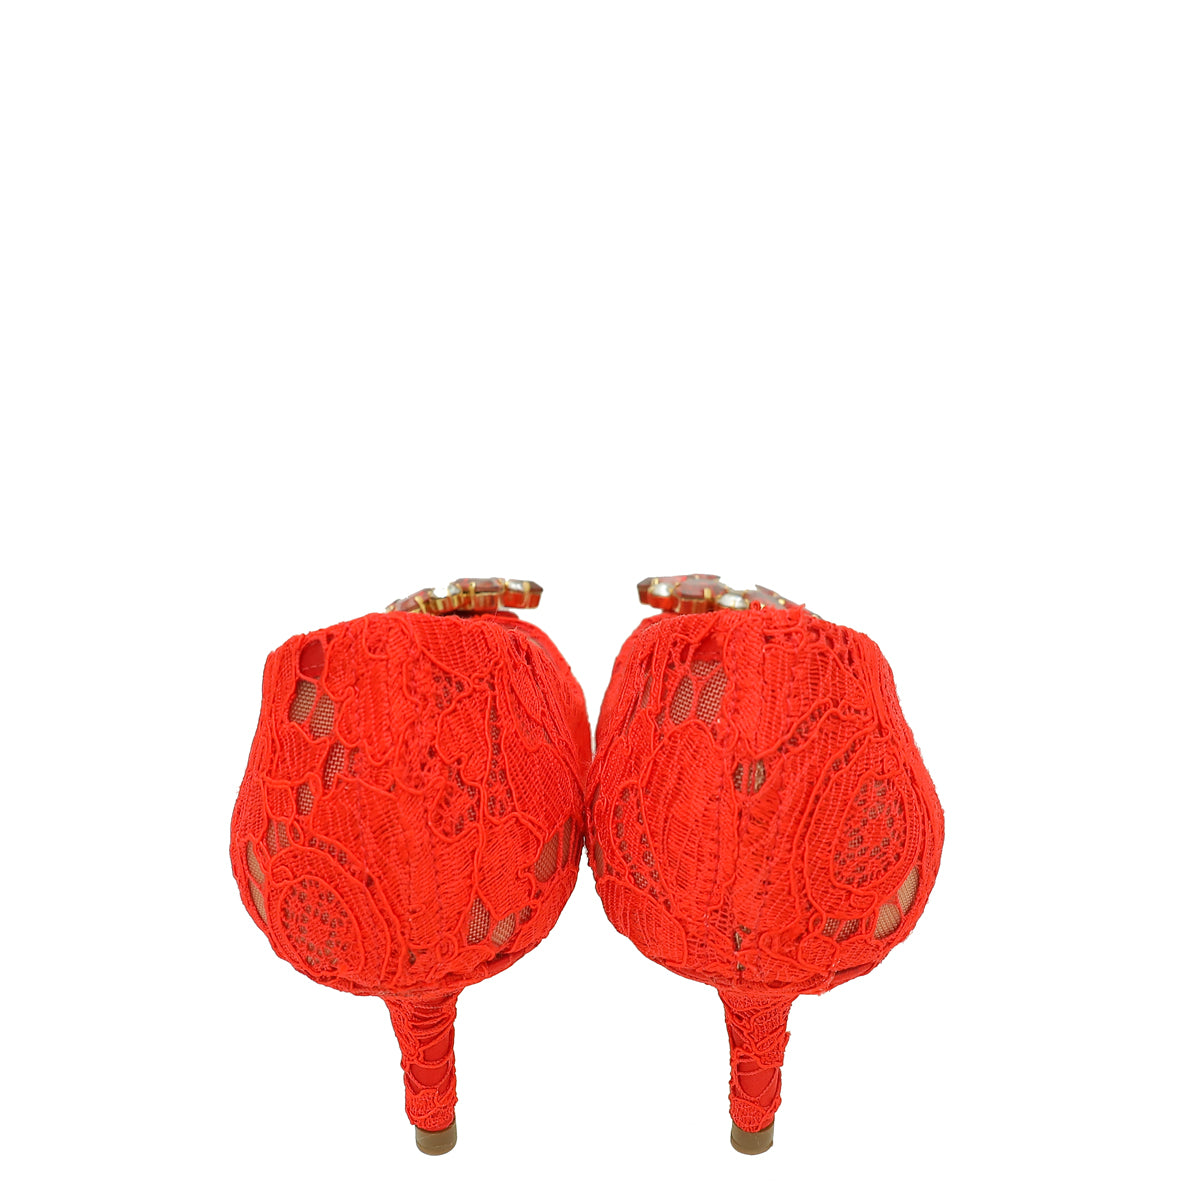 Dolce & Gabbana Red Bellucci Lace Embellished Pump 37